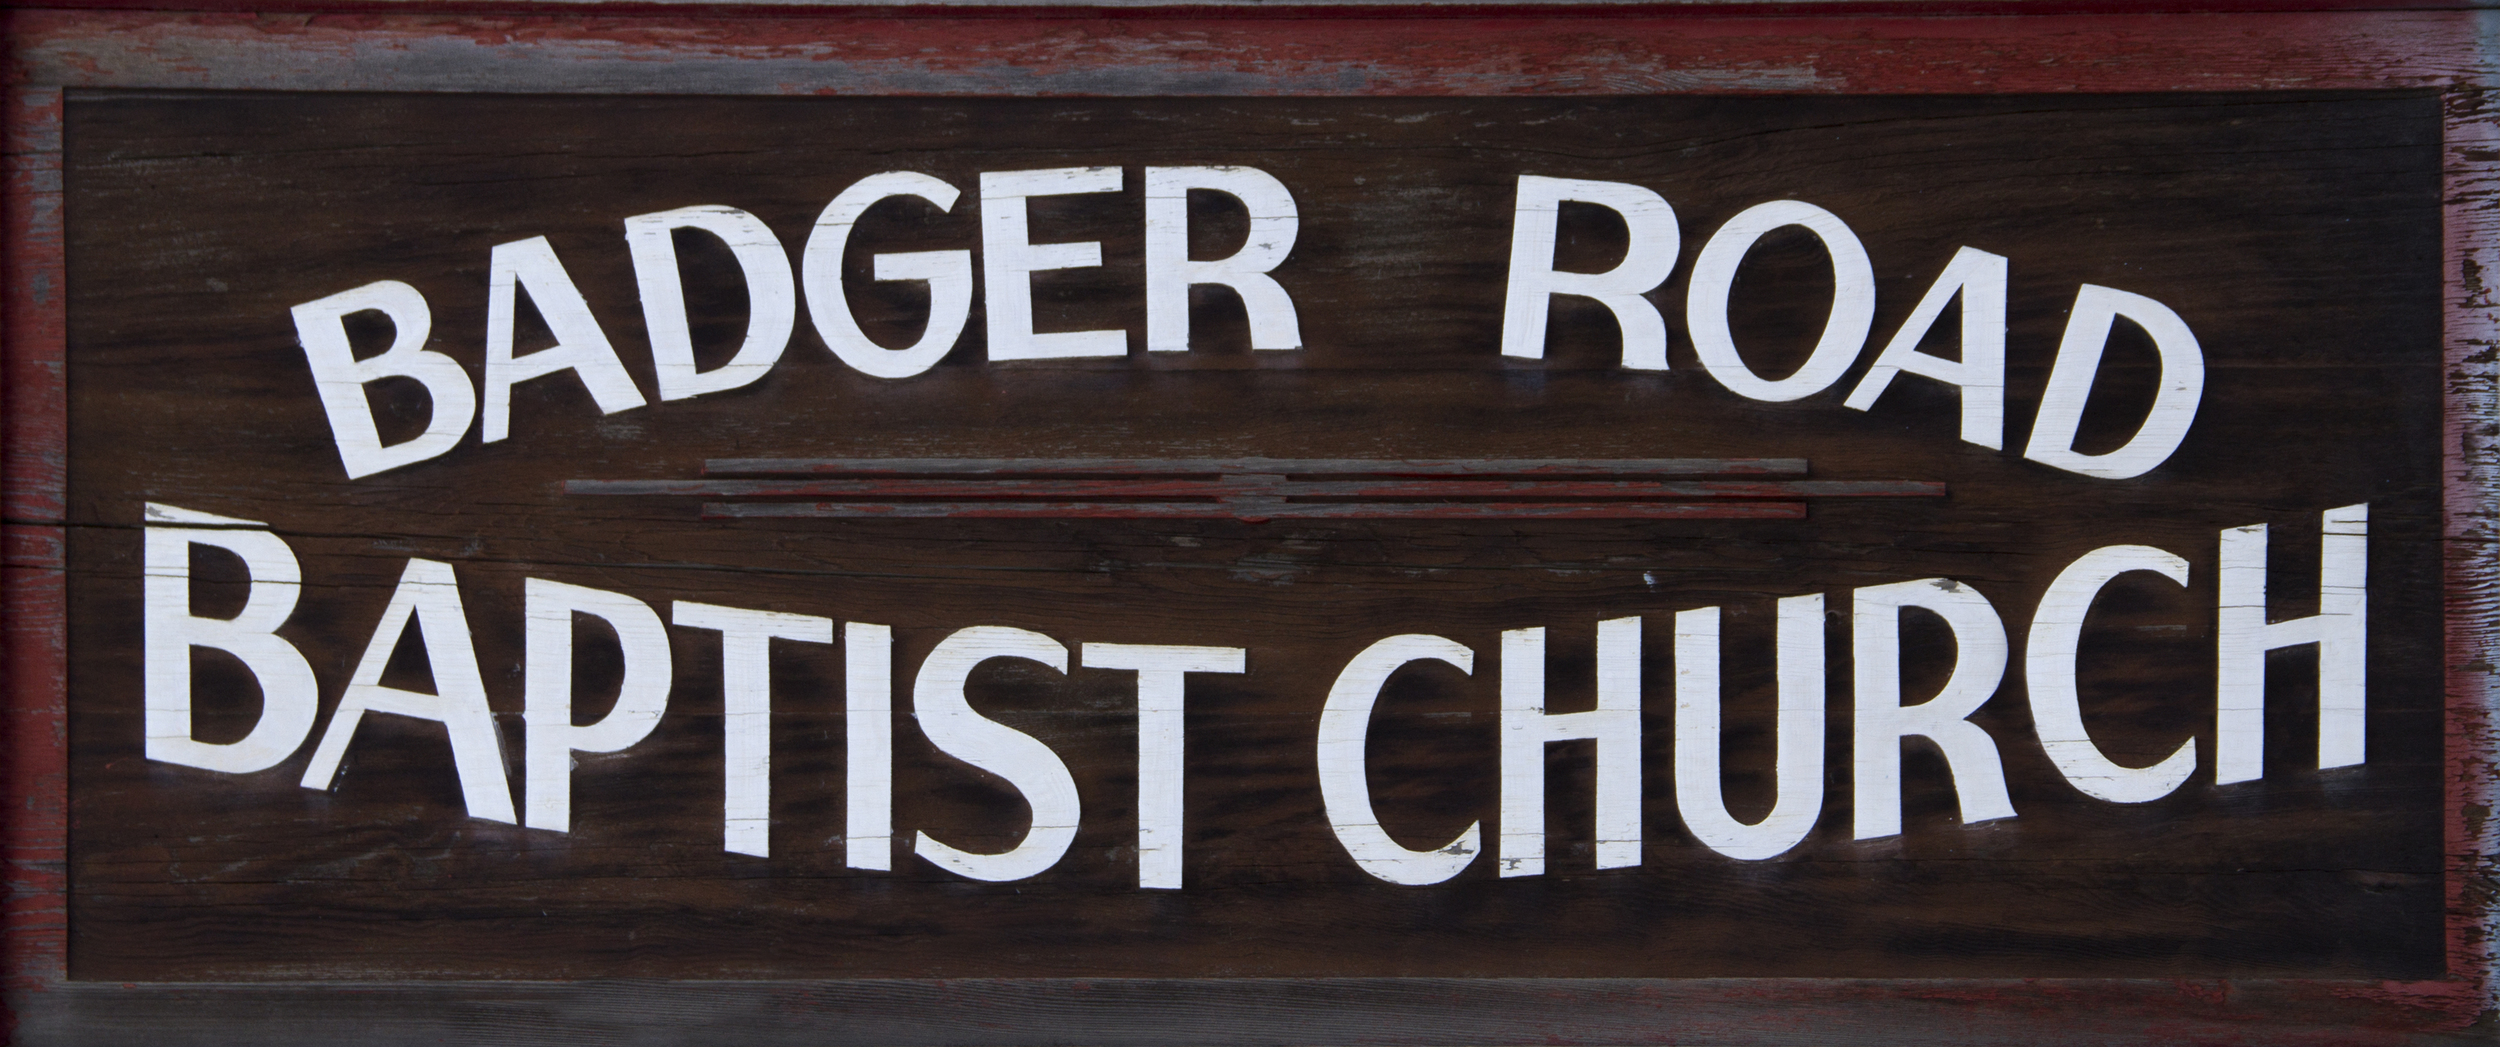 Badger Road Baptist Church